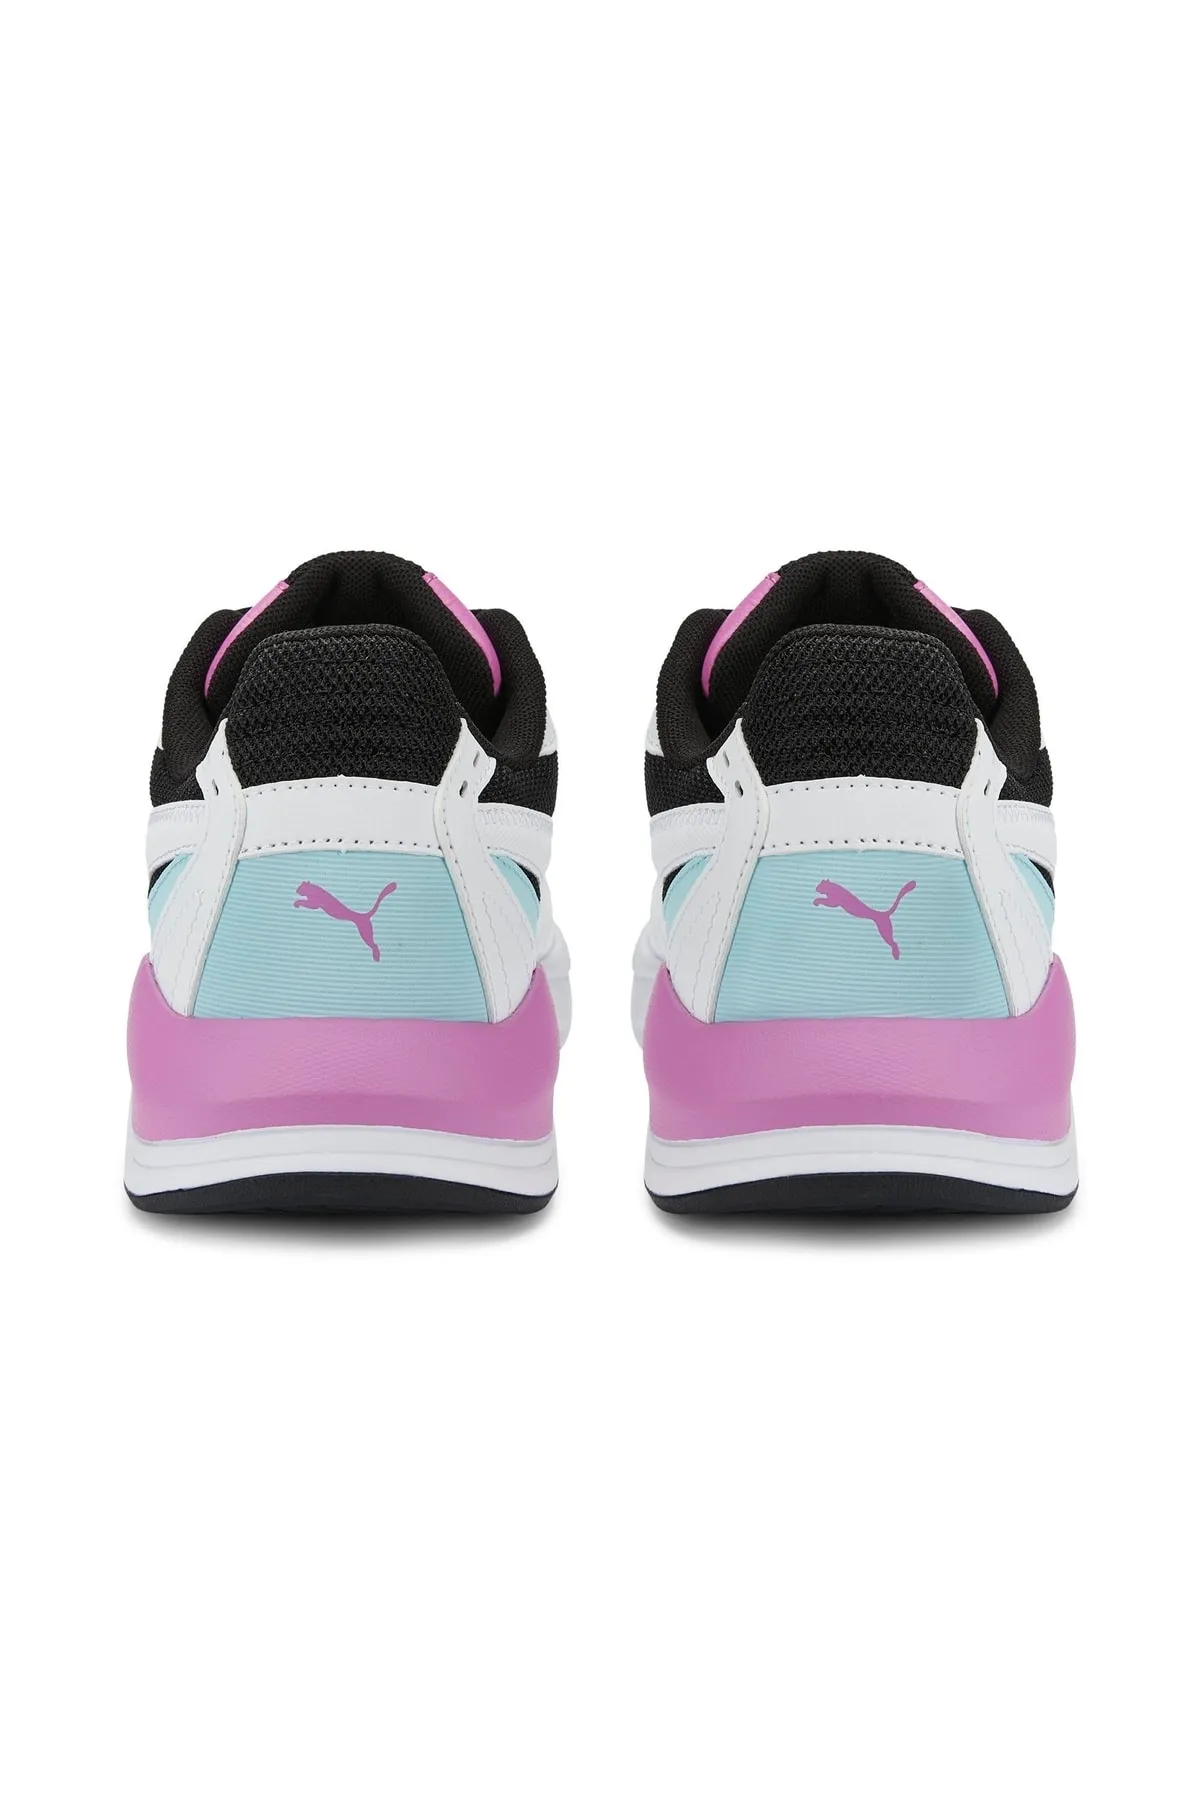 X-Ray Speed Lite - Kadın Sneaker Ayakkabı 384639 -Siyah